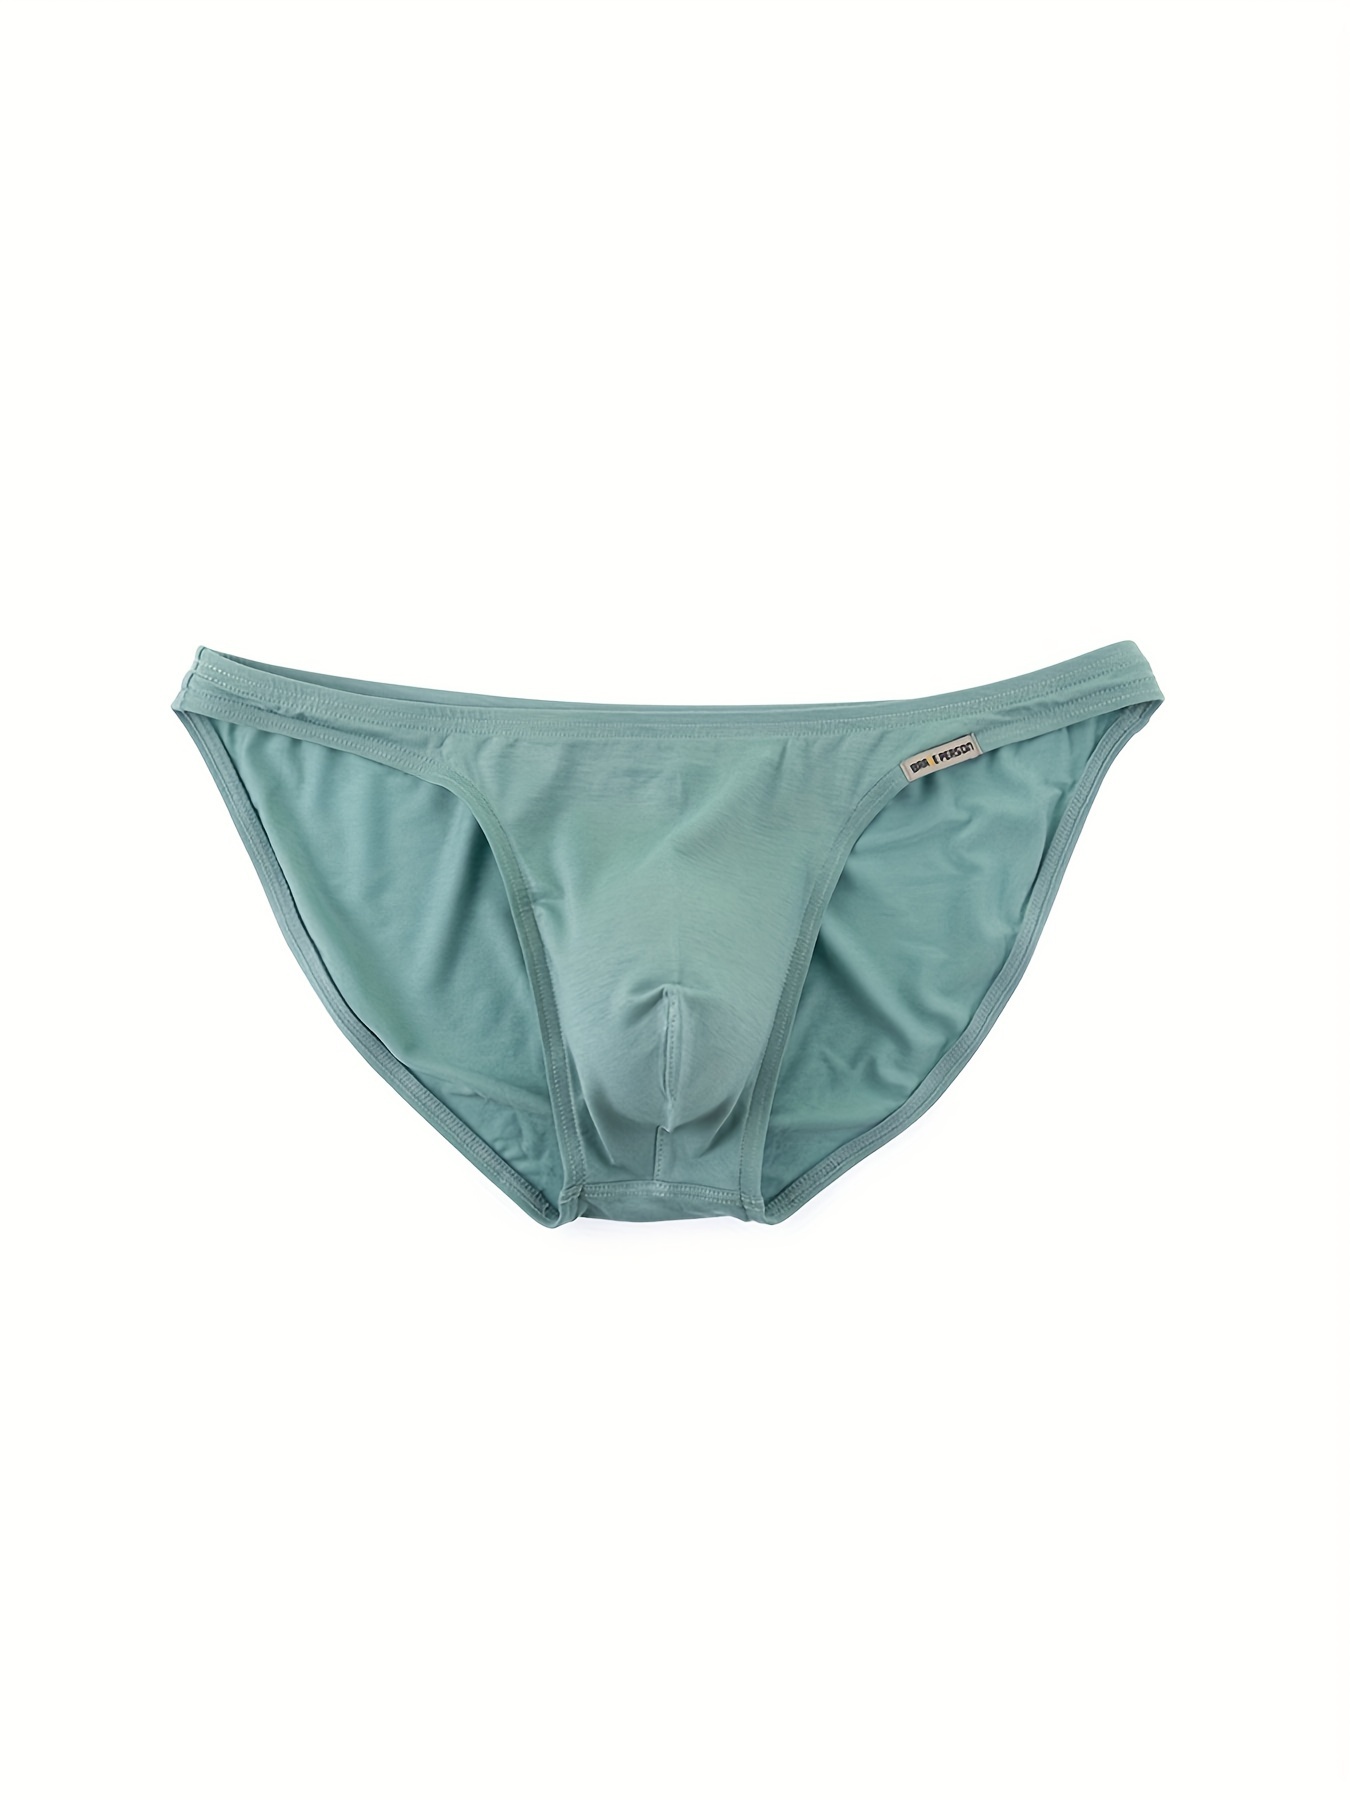 Bulge Enhancing Underwear, Bamboo Men's Underwear